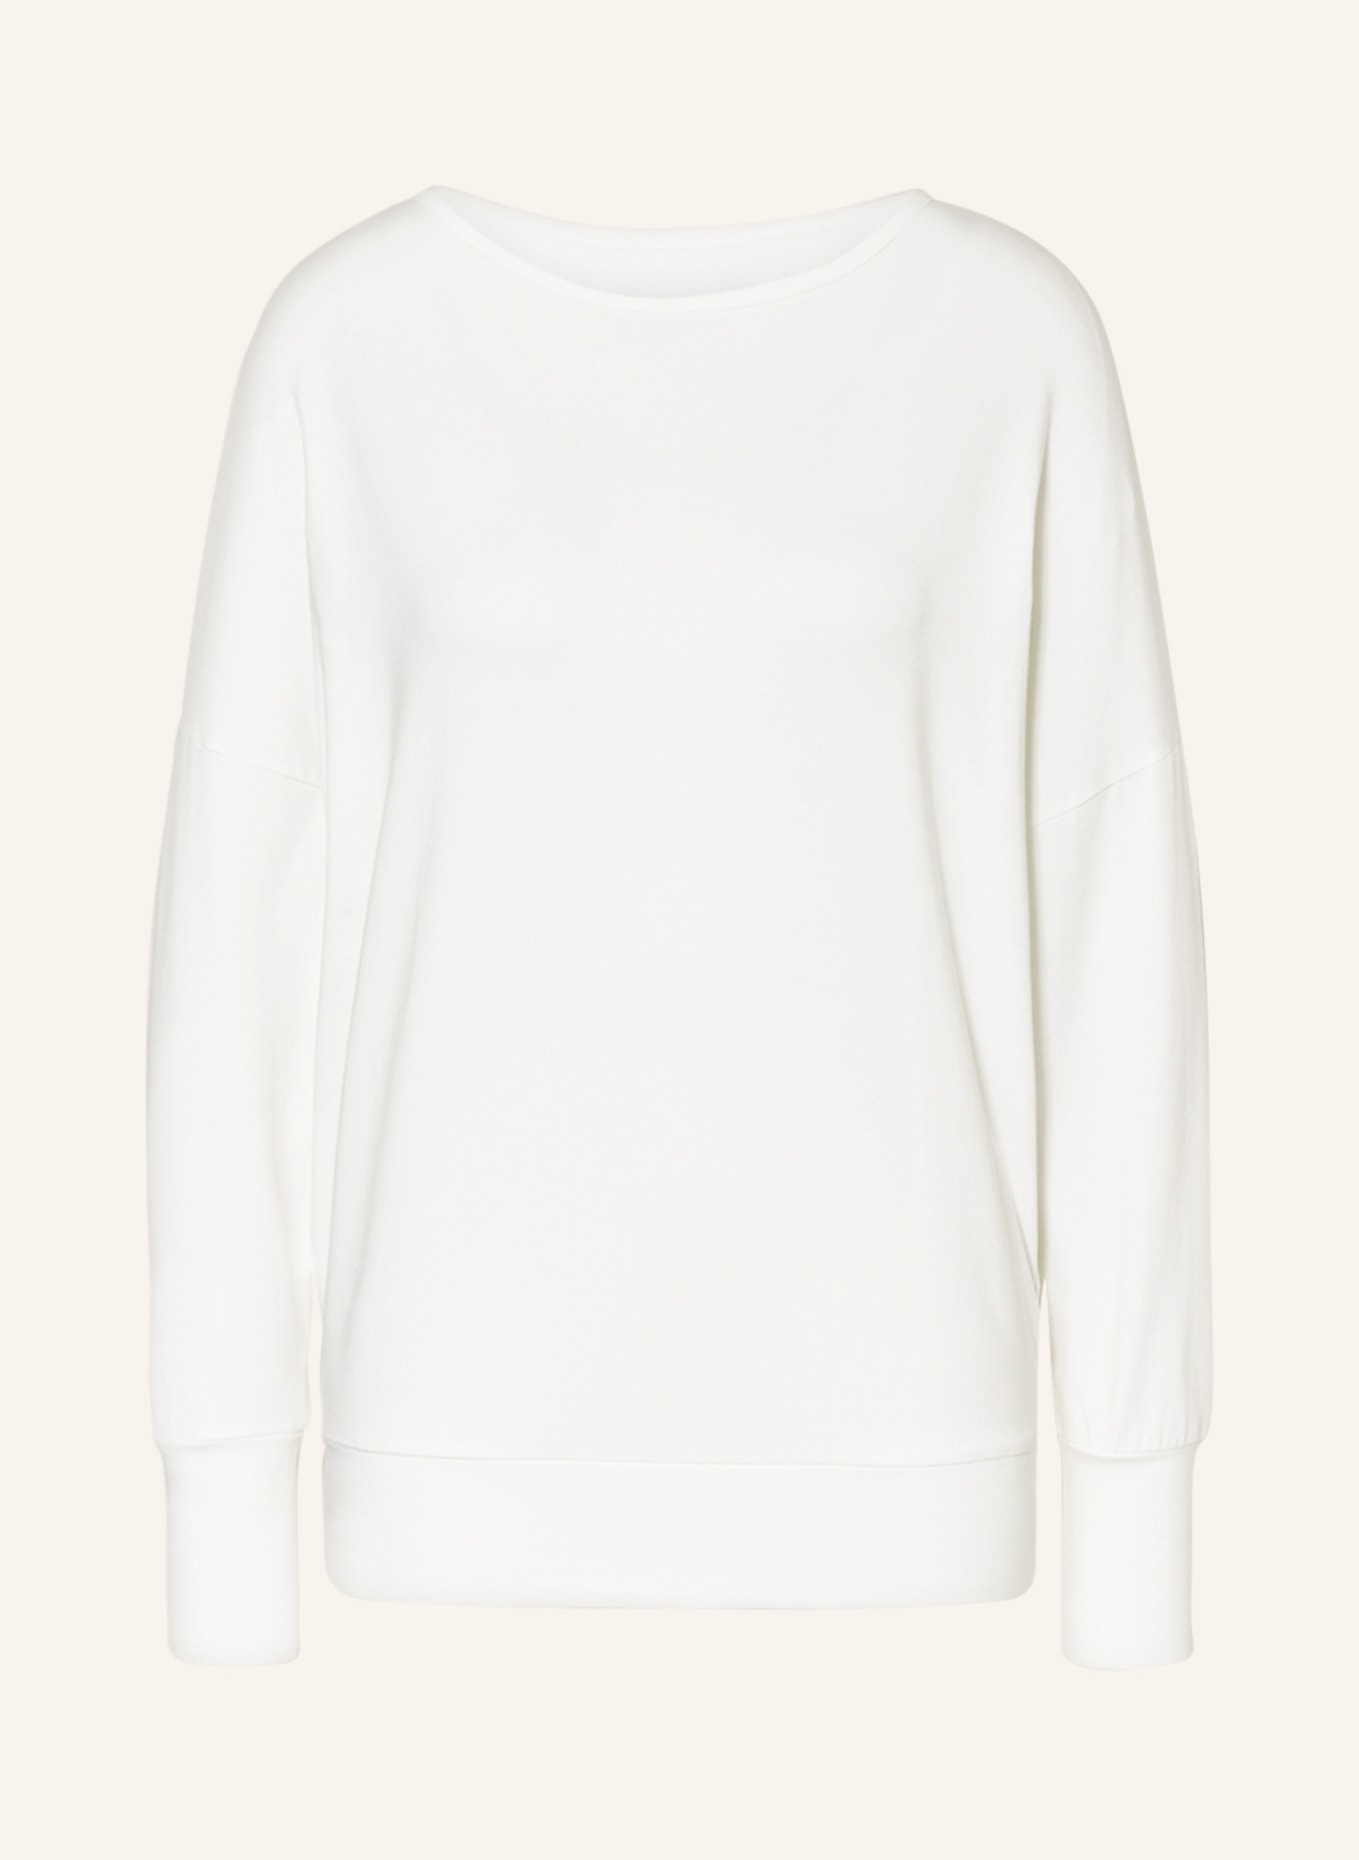 VENICE BEACH Sweatshirt CALMA, Farbe: WEISS (Bild 1)